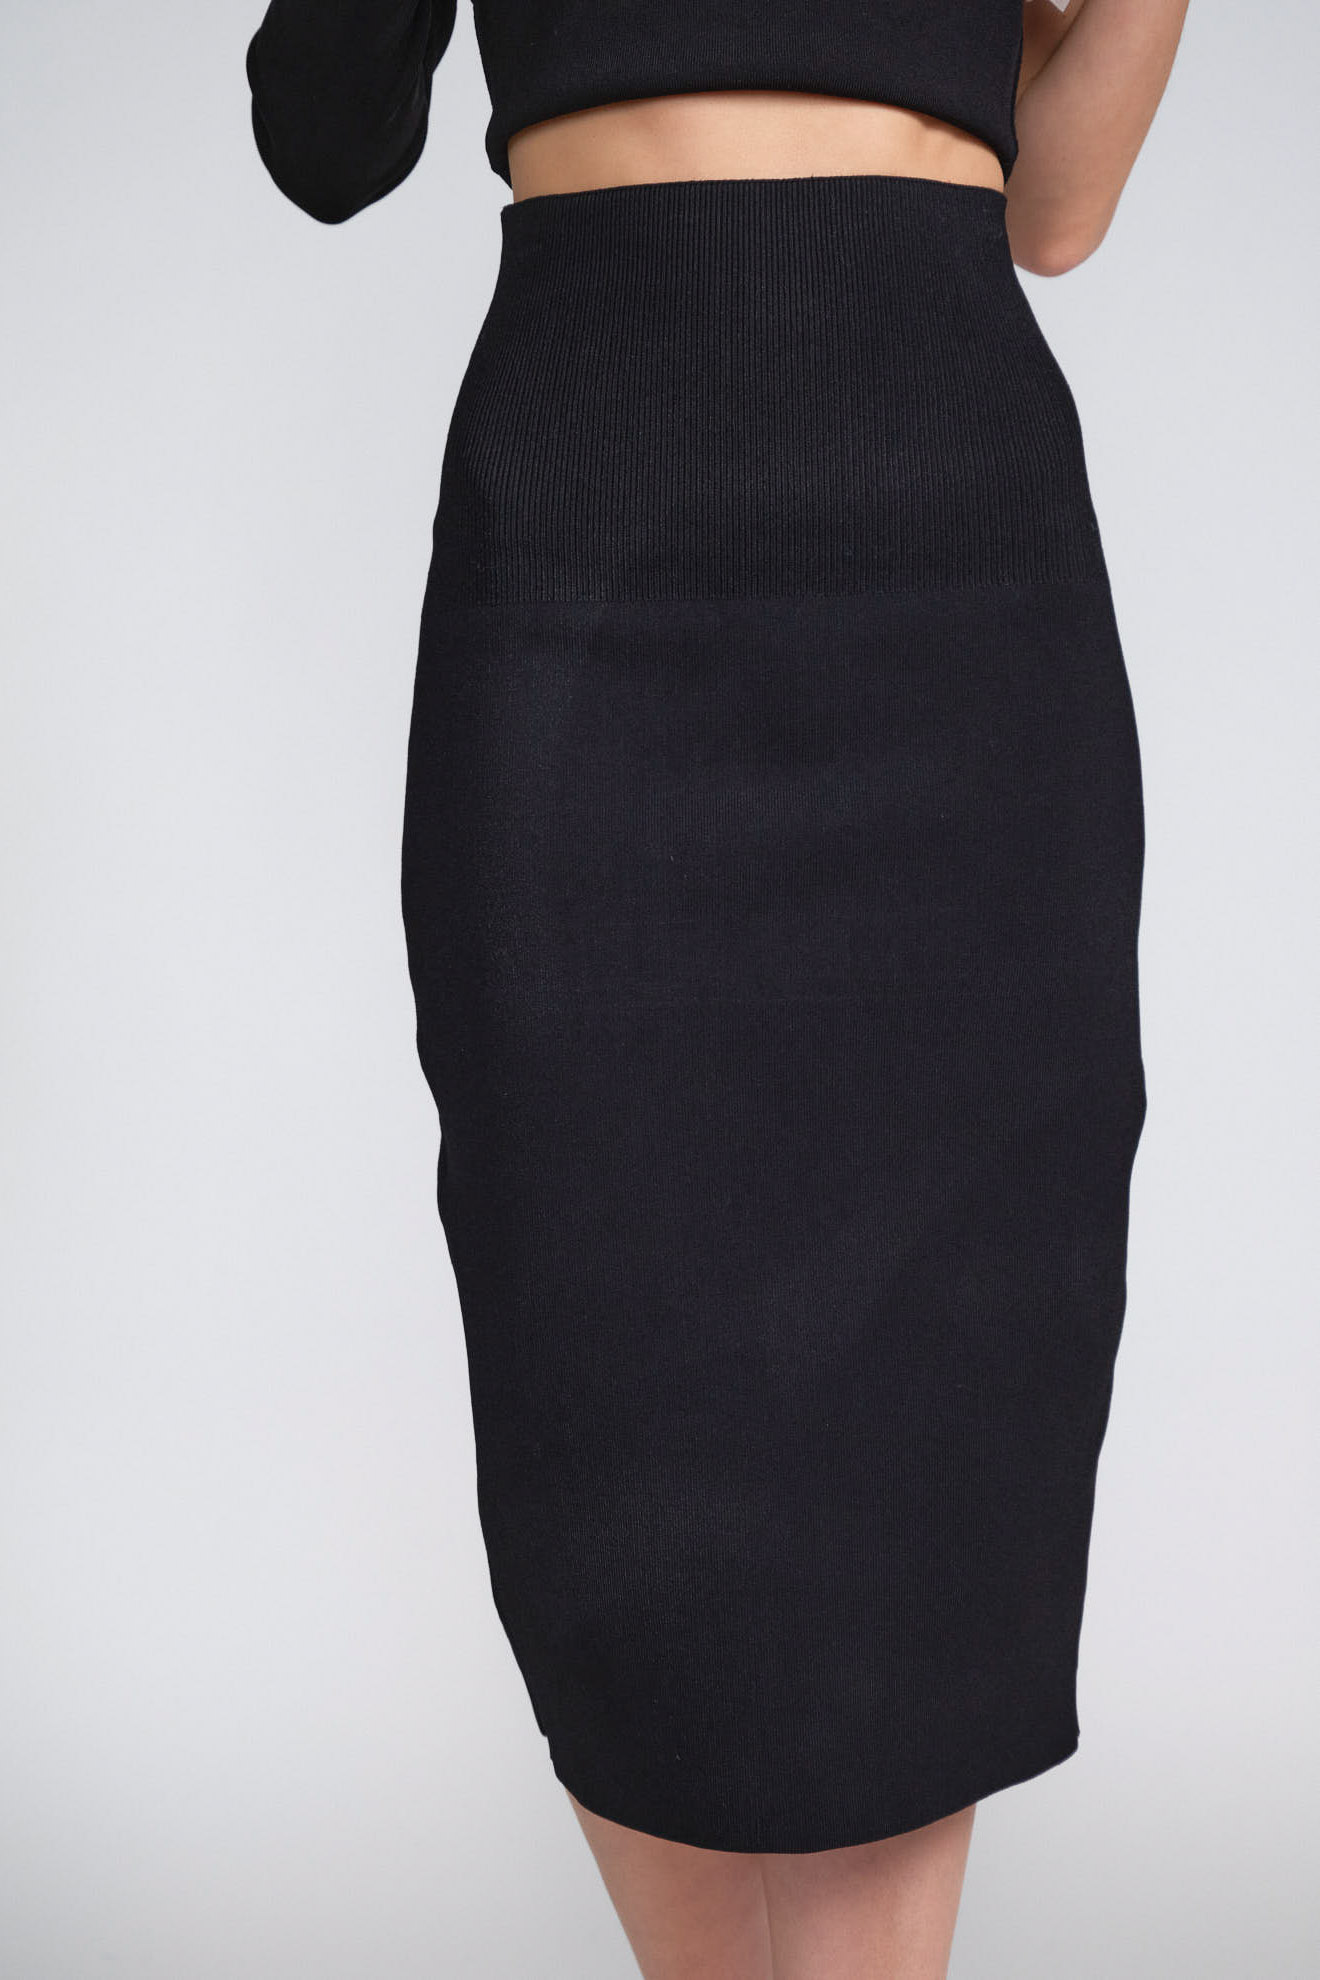 victoria beckham skirt black plain mix model front